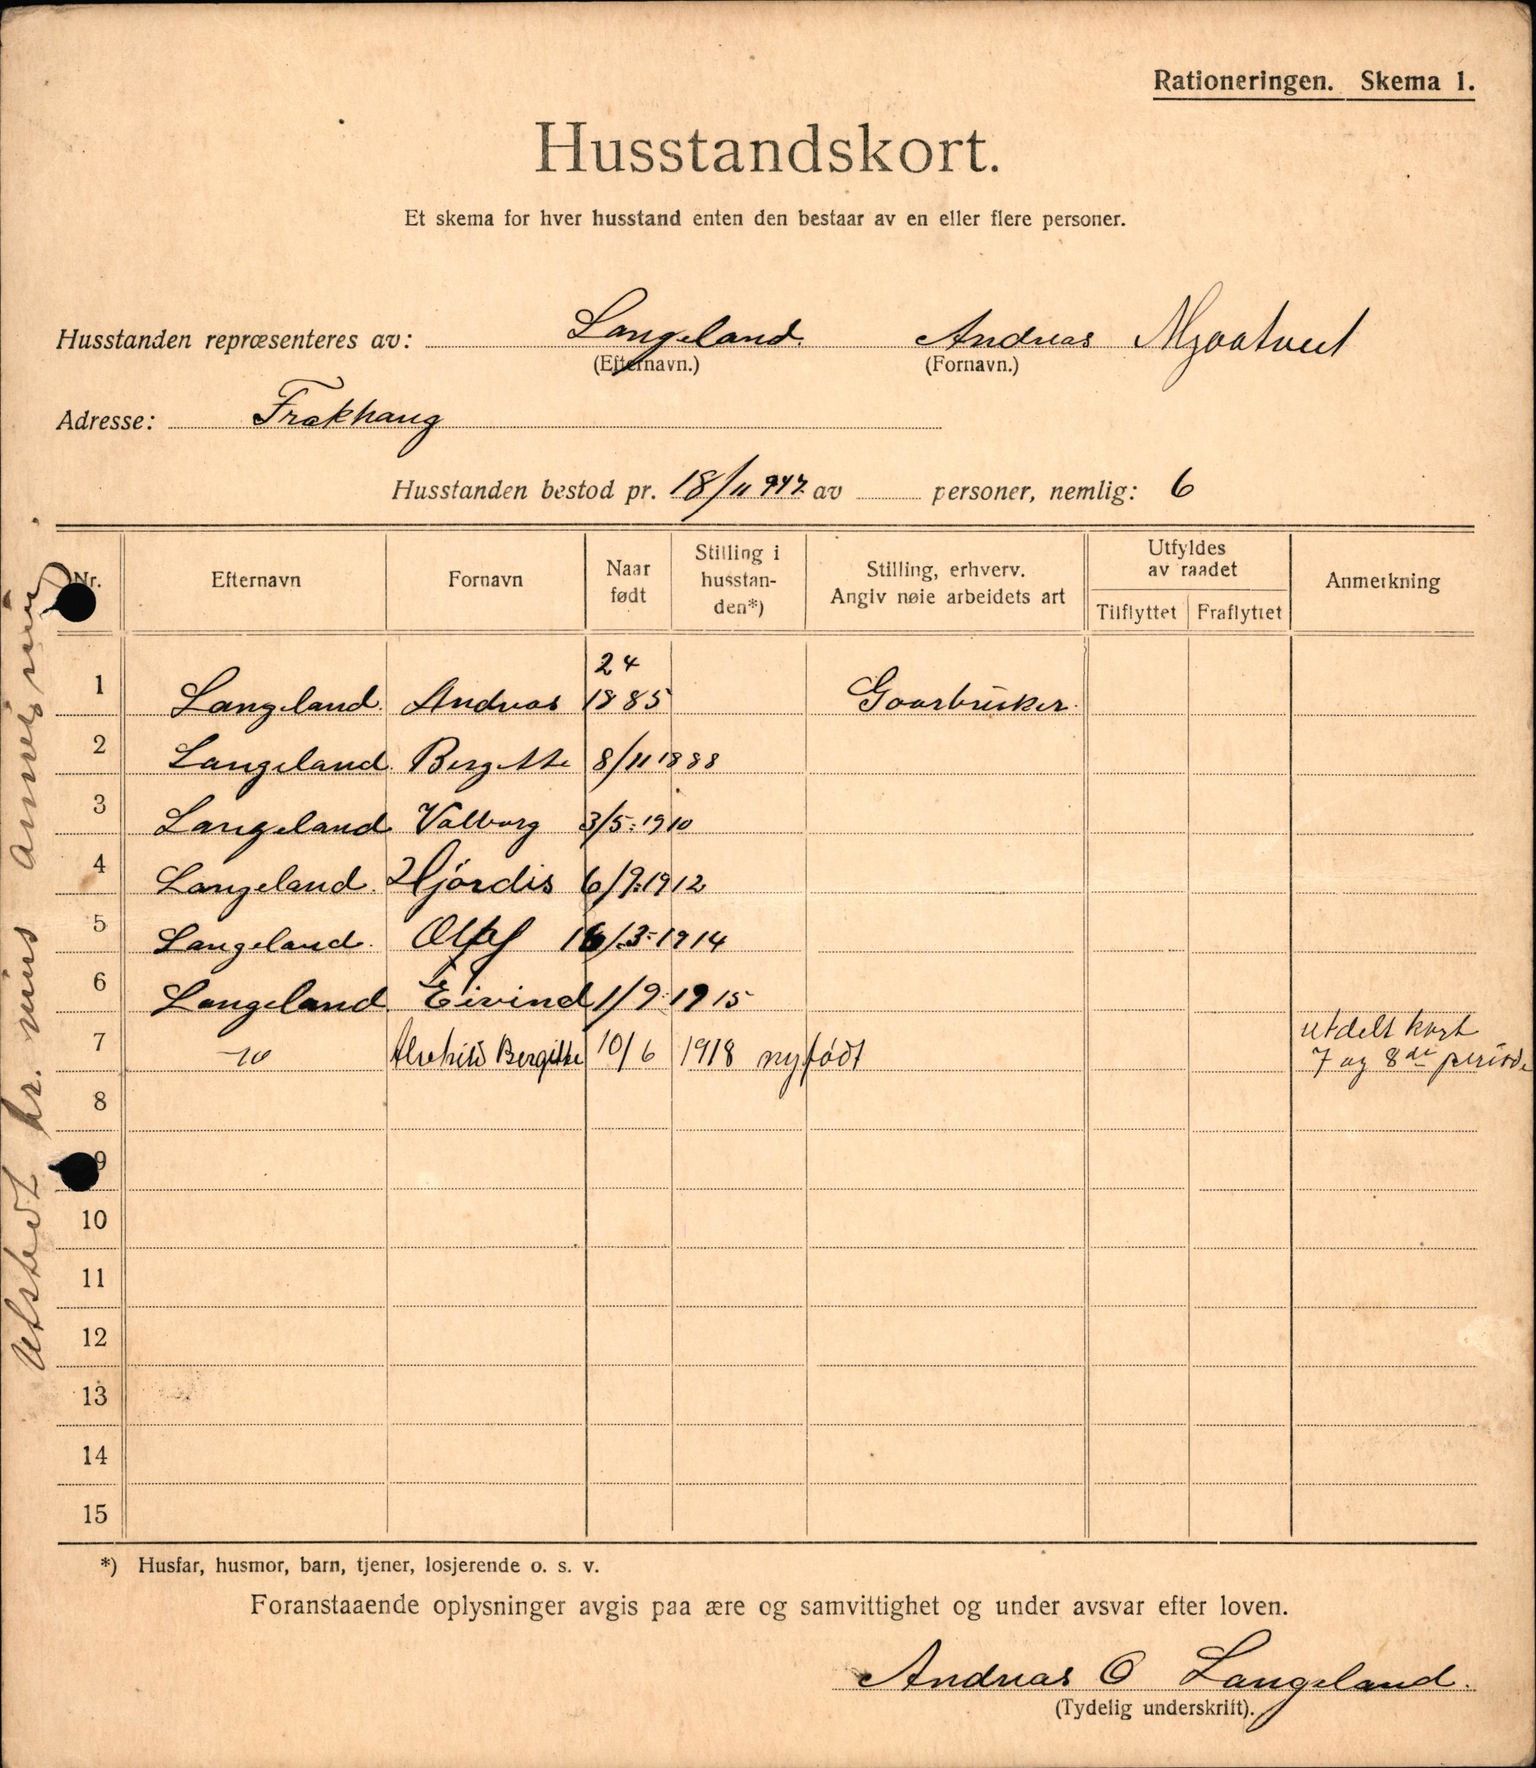 IKAH, Meland kommune, Provianteringsrådet, Husstander per 01.11.1917, 1917-1918, p. 159